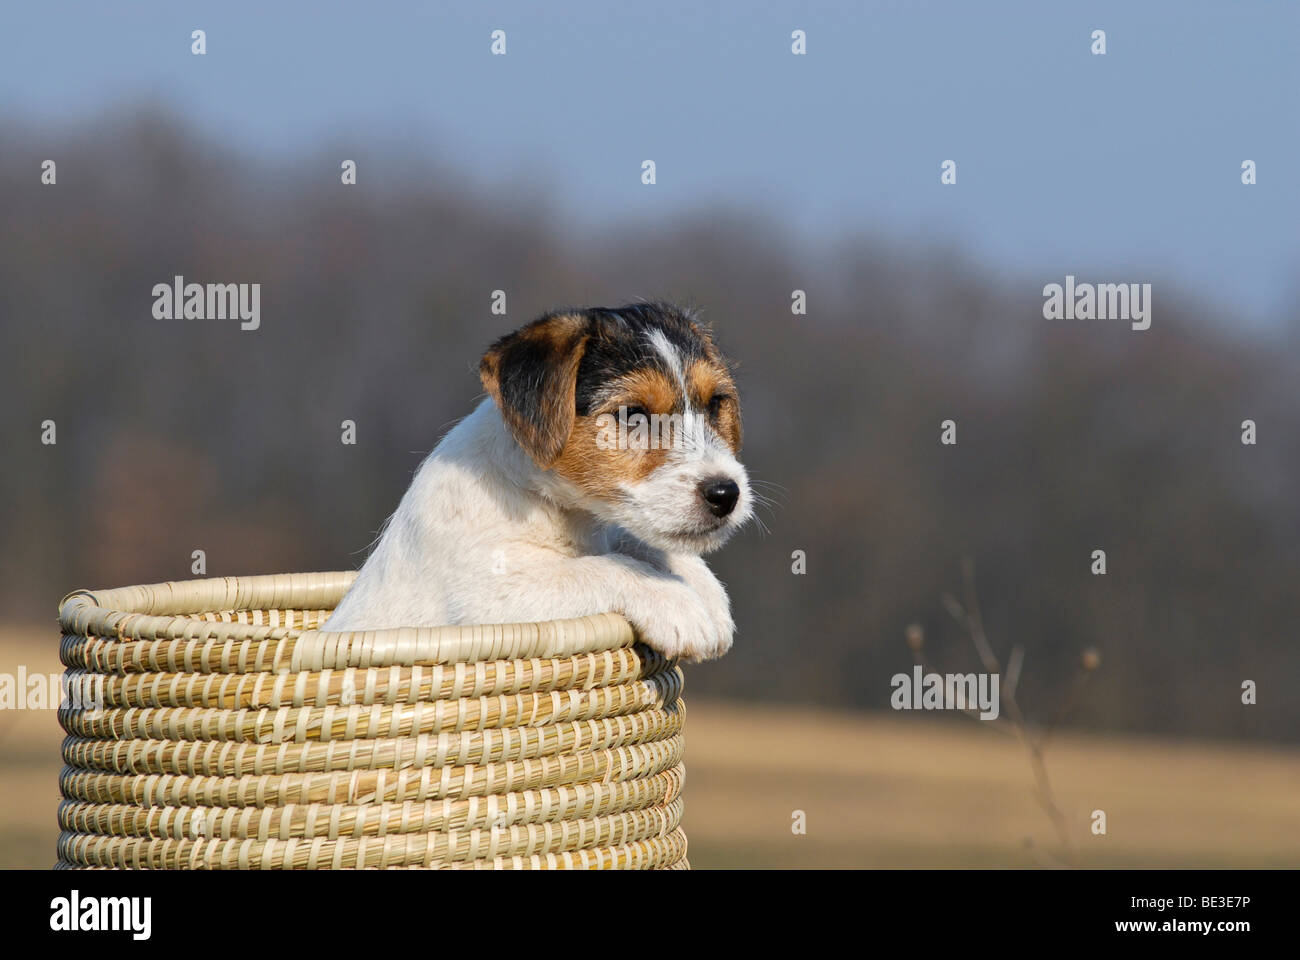 Jack Russell Terrier puppy assis dans un panier en osier Banque D'Images